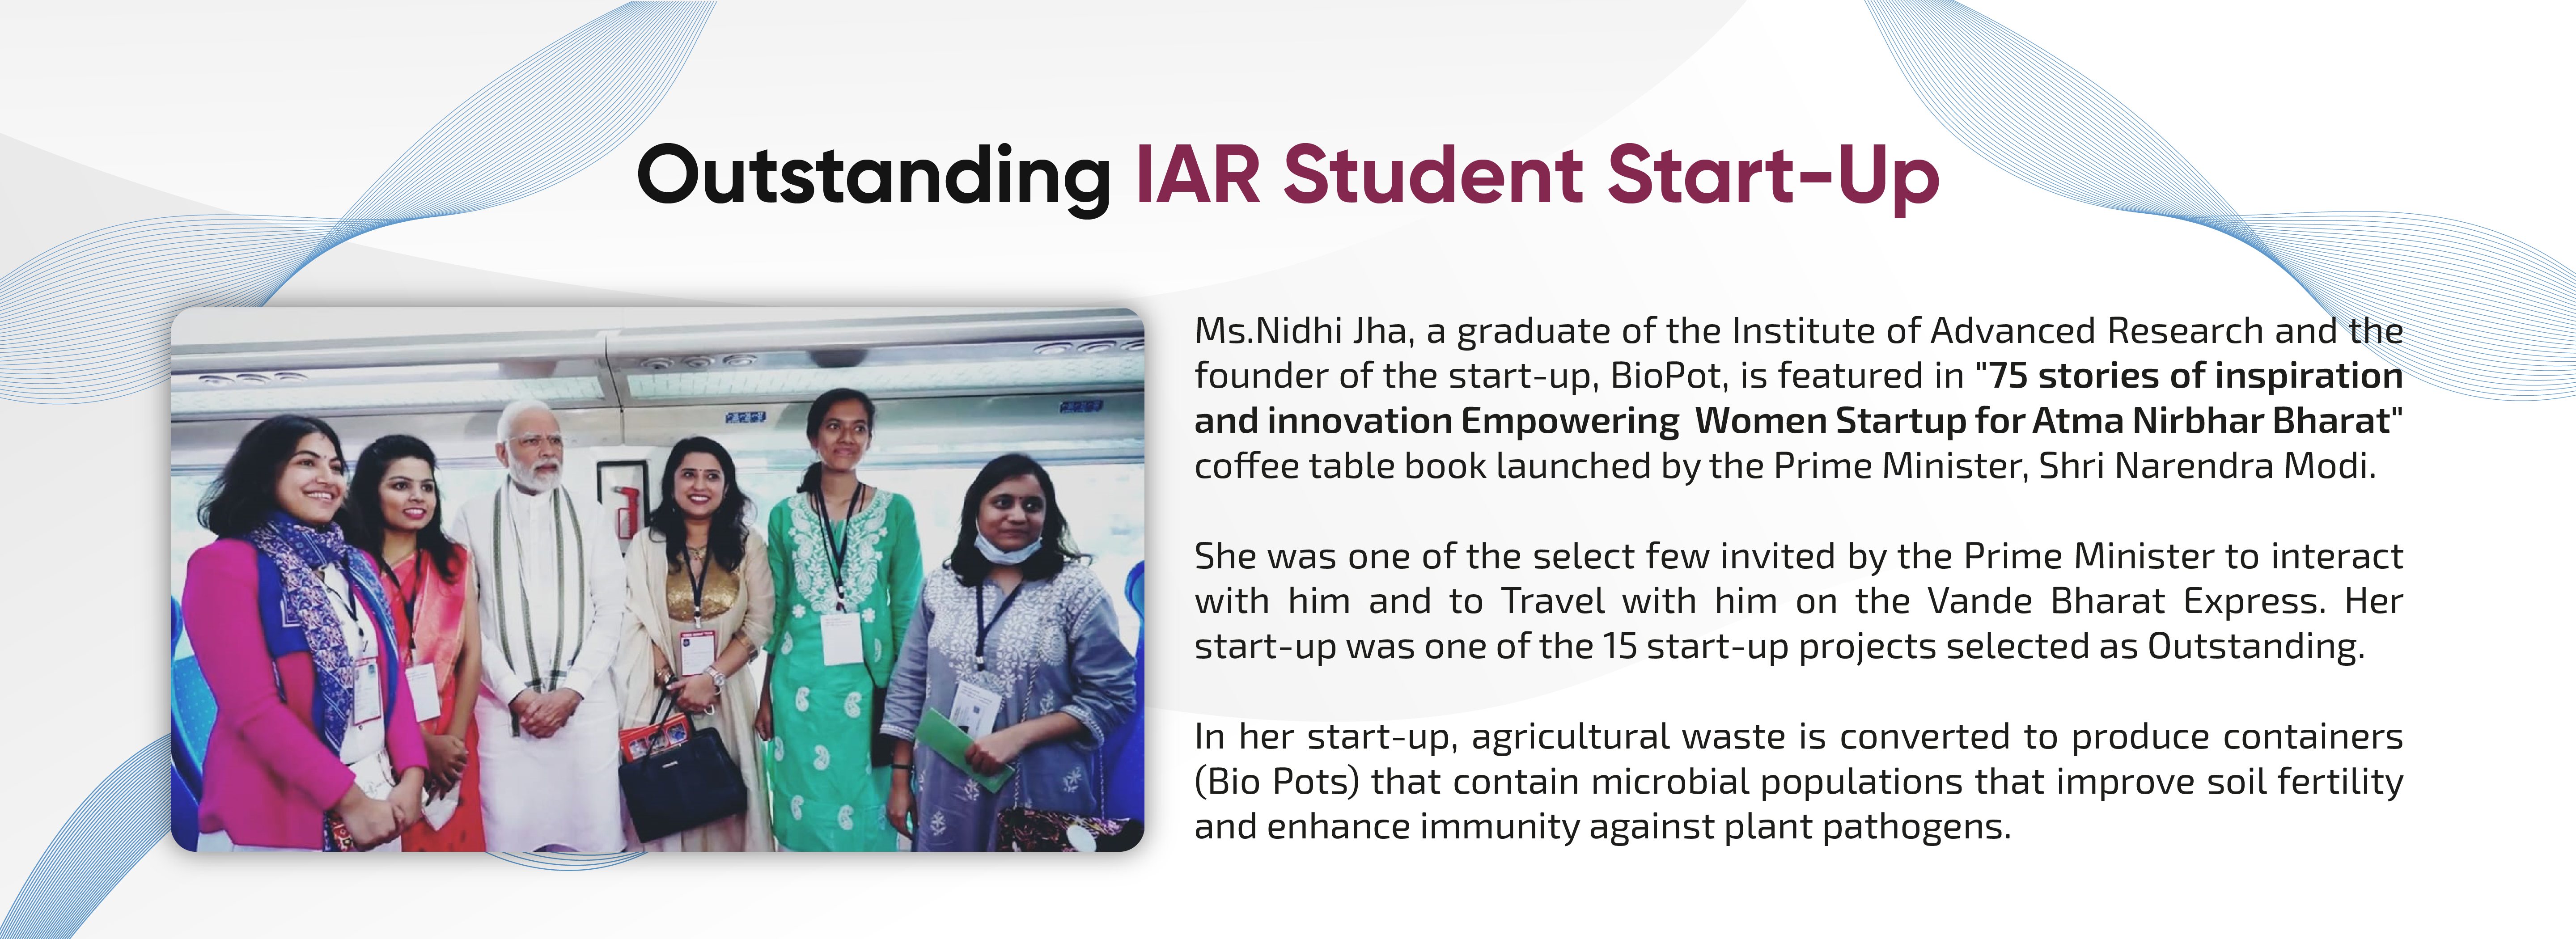 Outstanding IAR Student Start-Up